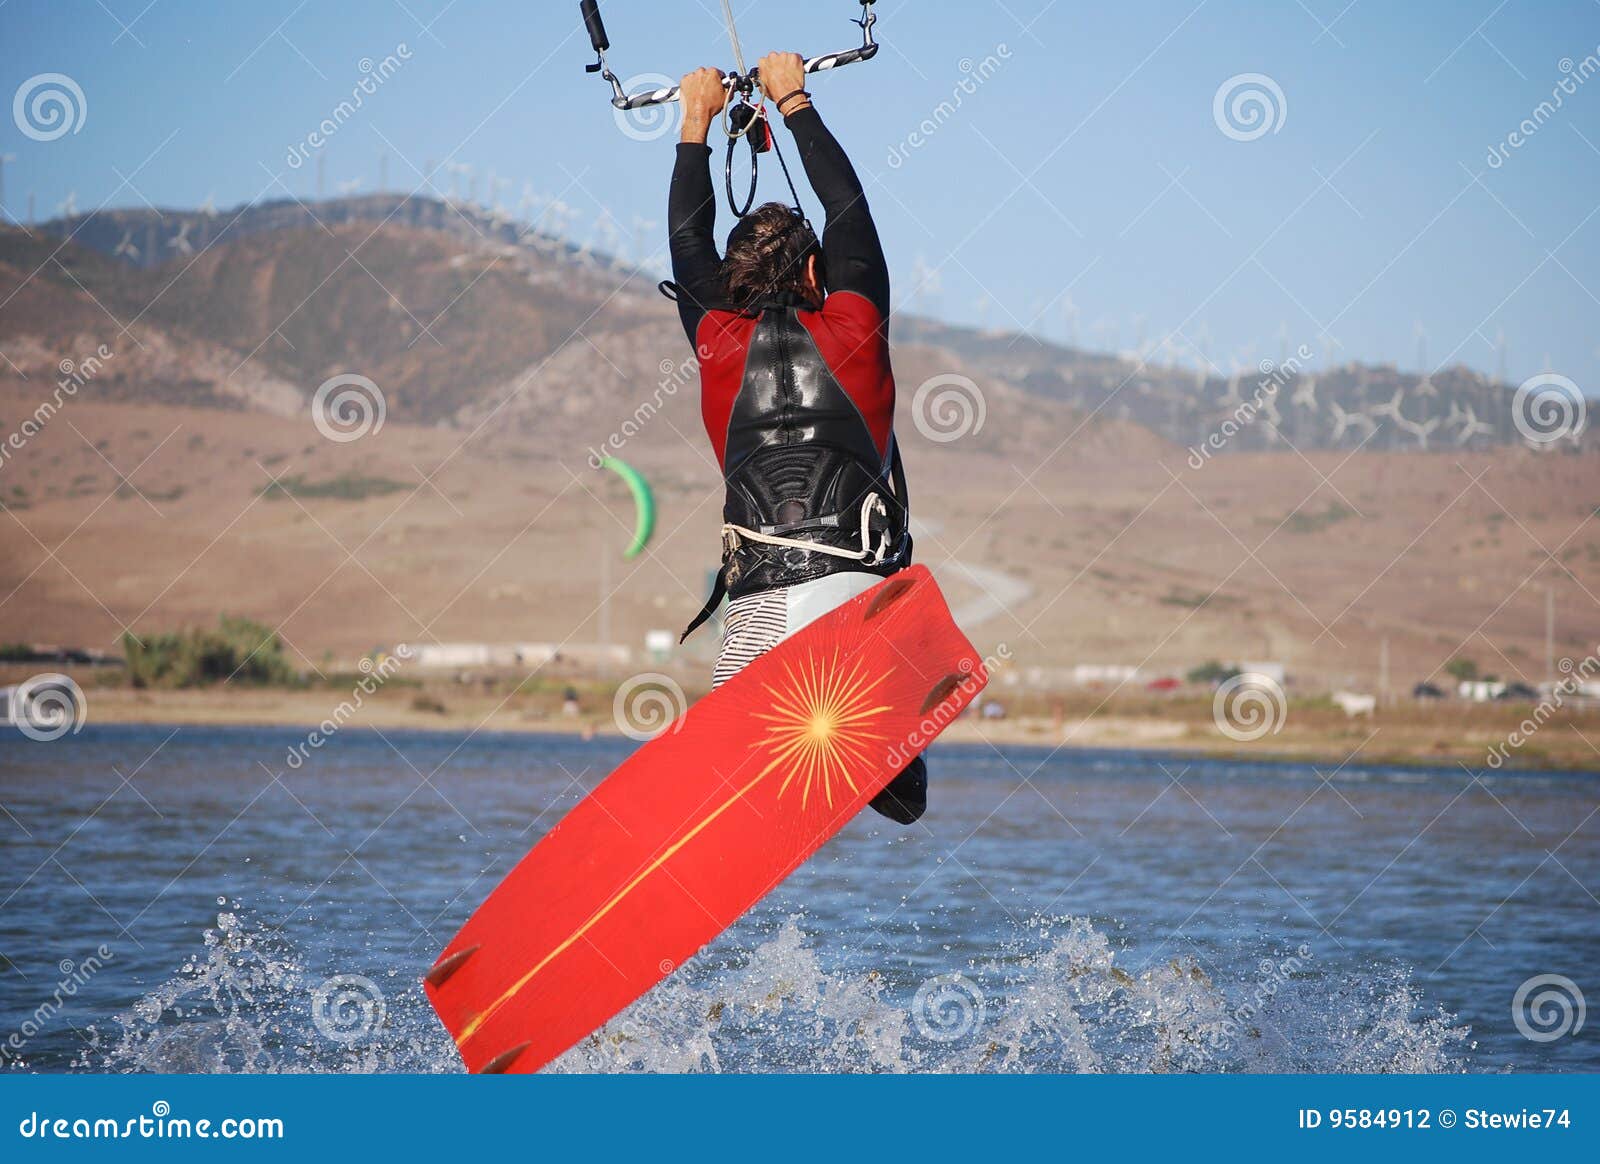 kiter flying on the waves near tarifa, spain